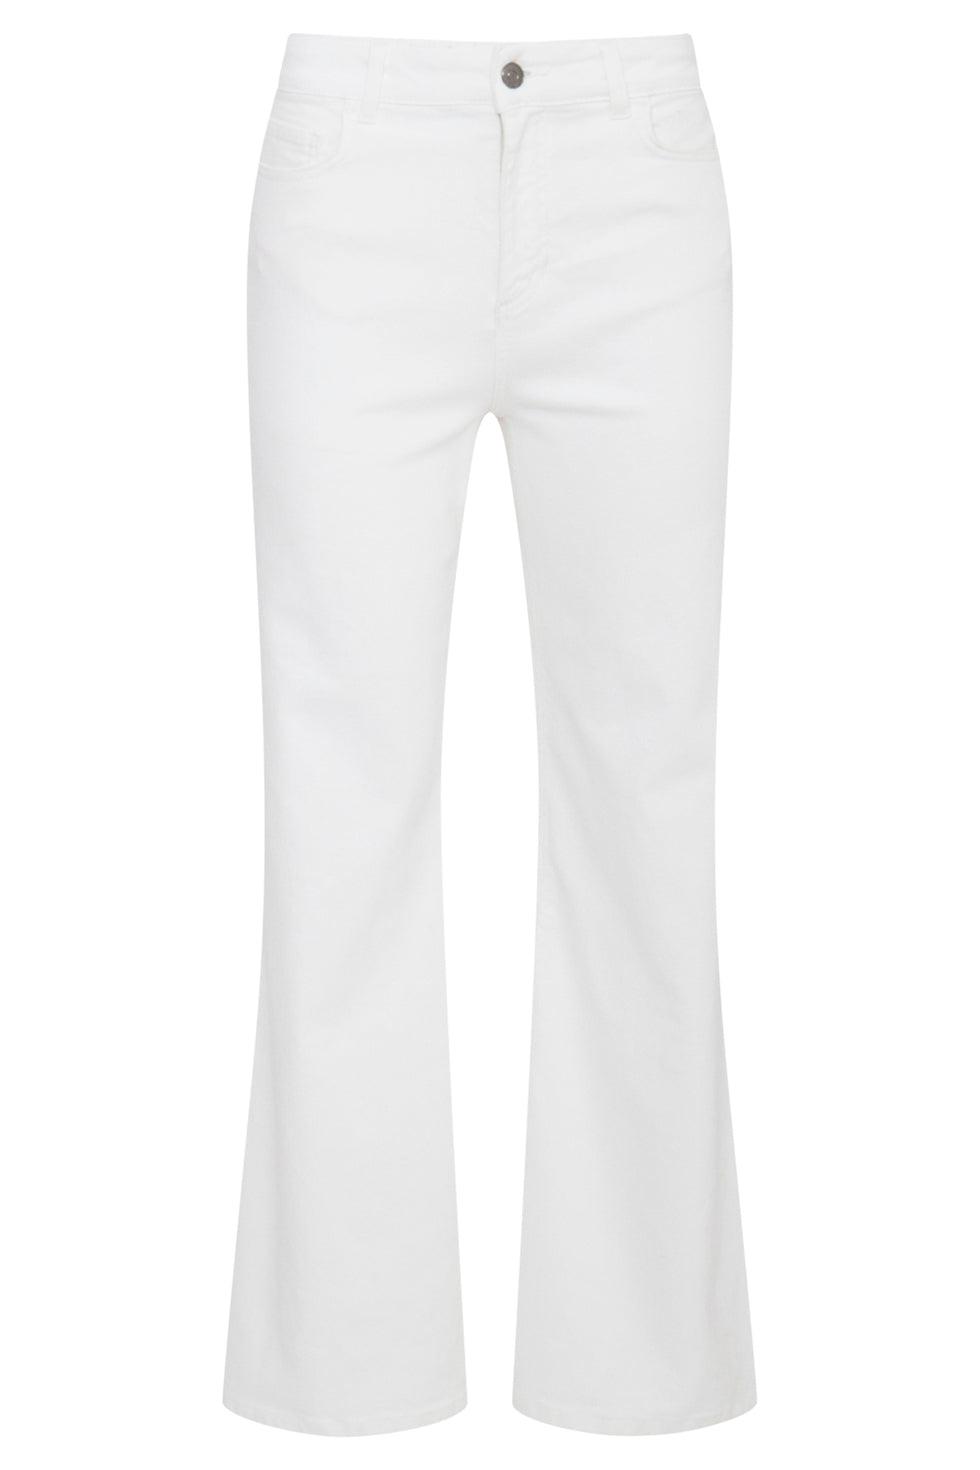 23171-000 Hoge Taille Witte Rechte Jeans Broek